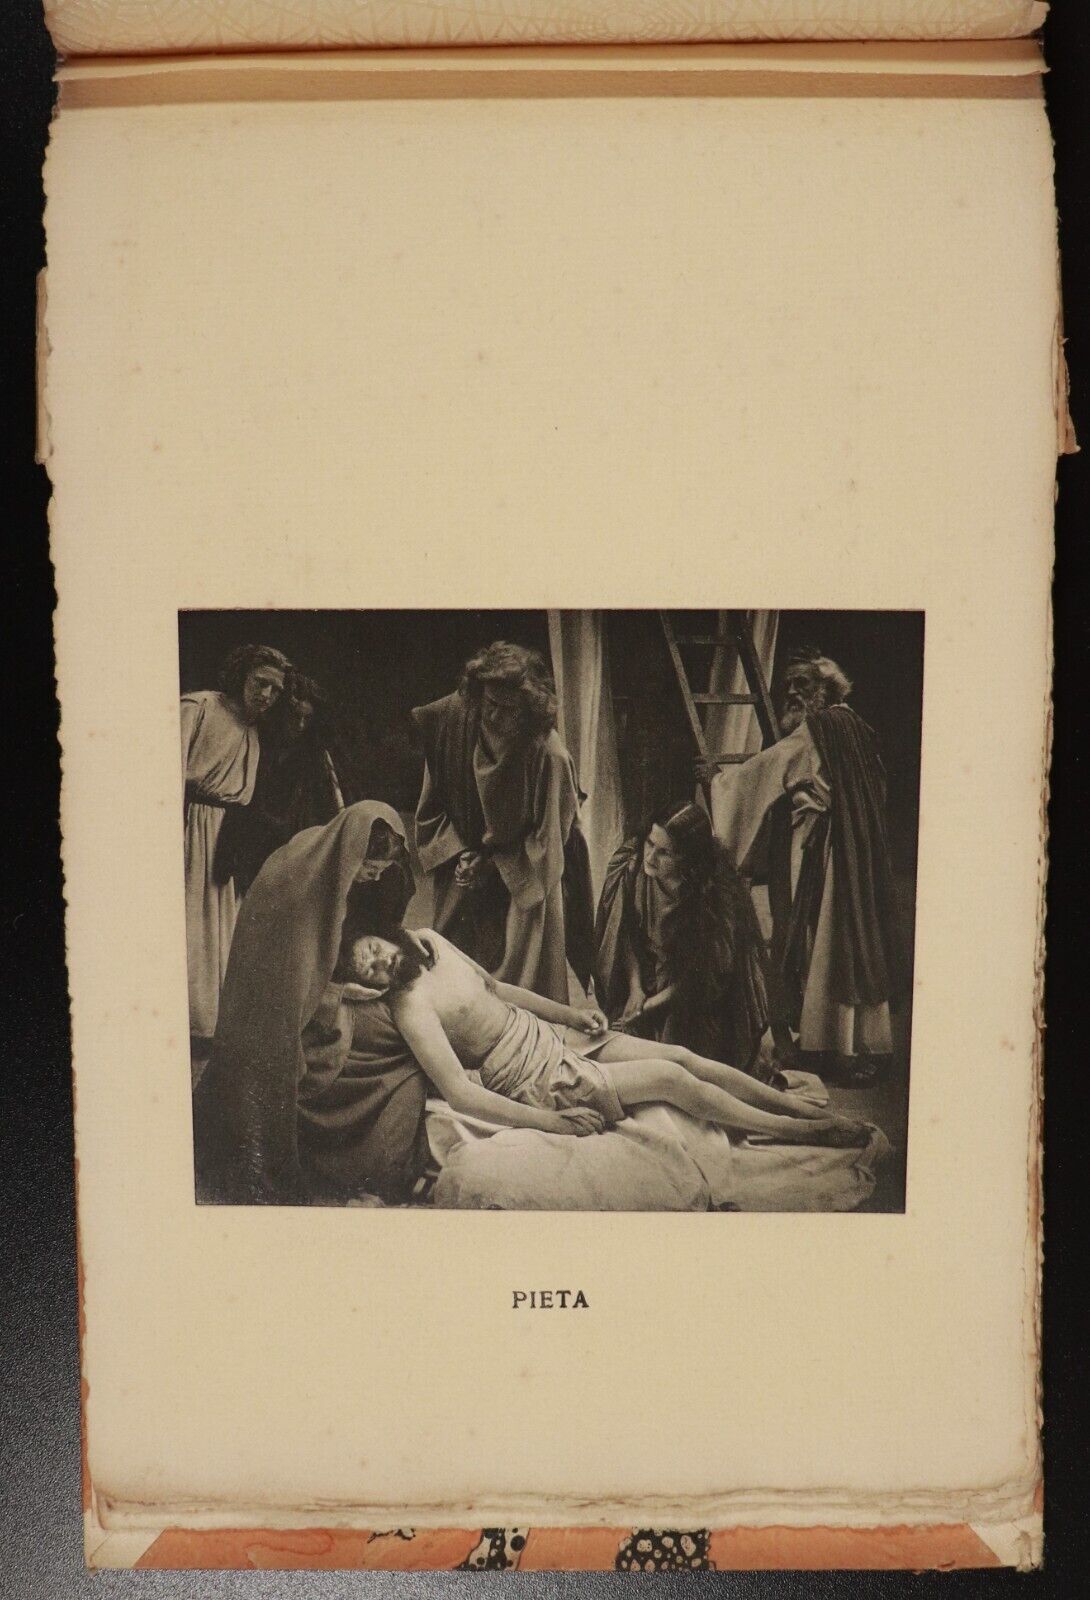 1930 Album Of Scenes From The Oberammergau Passion Play Antique Theatre Book